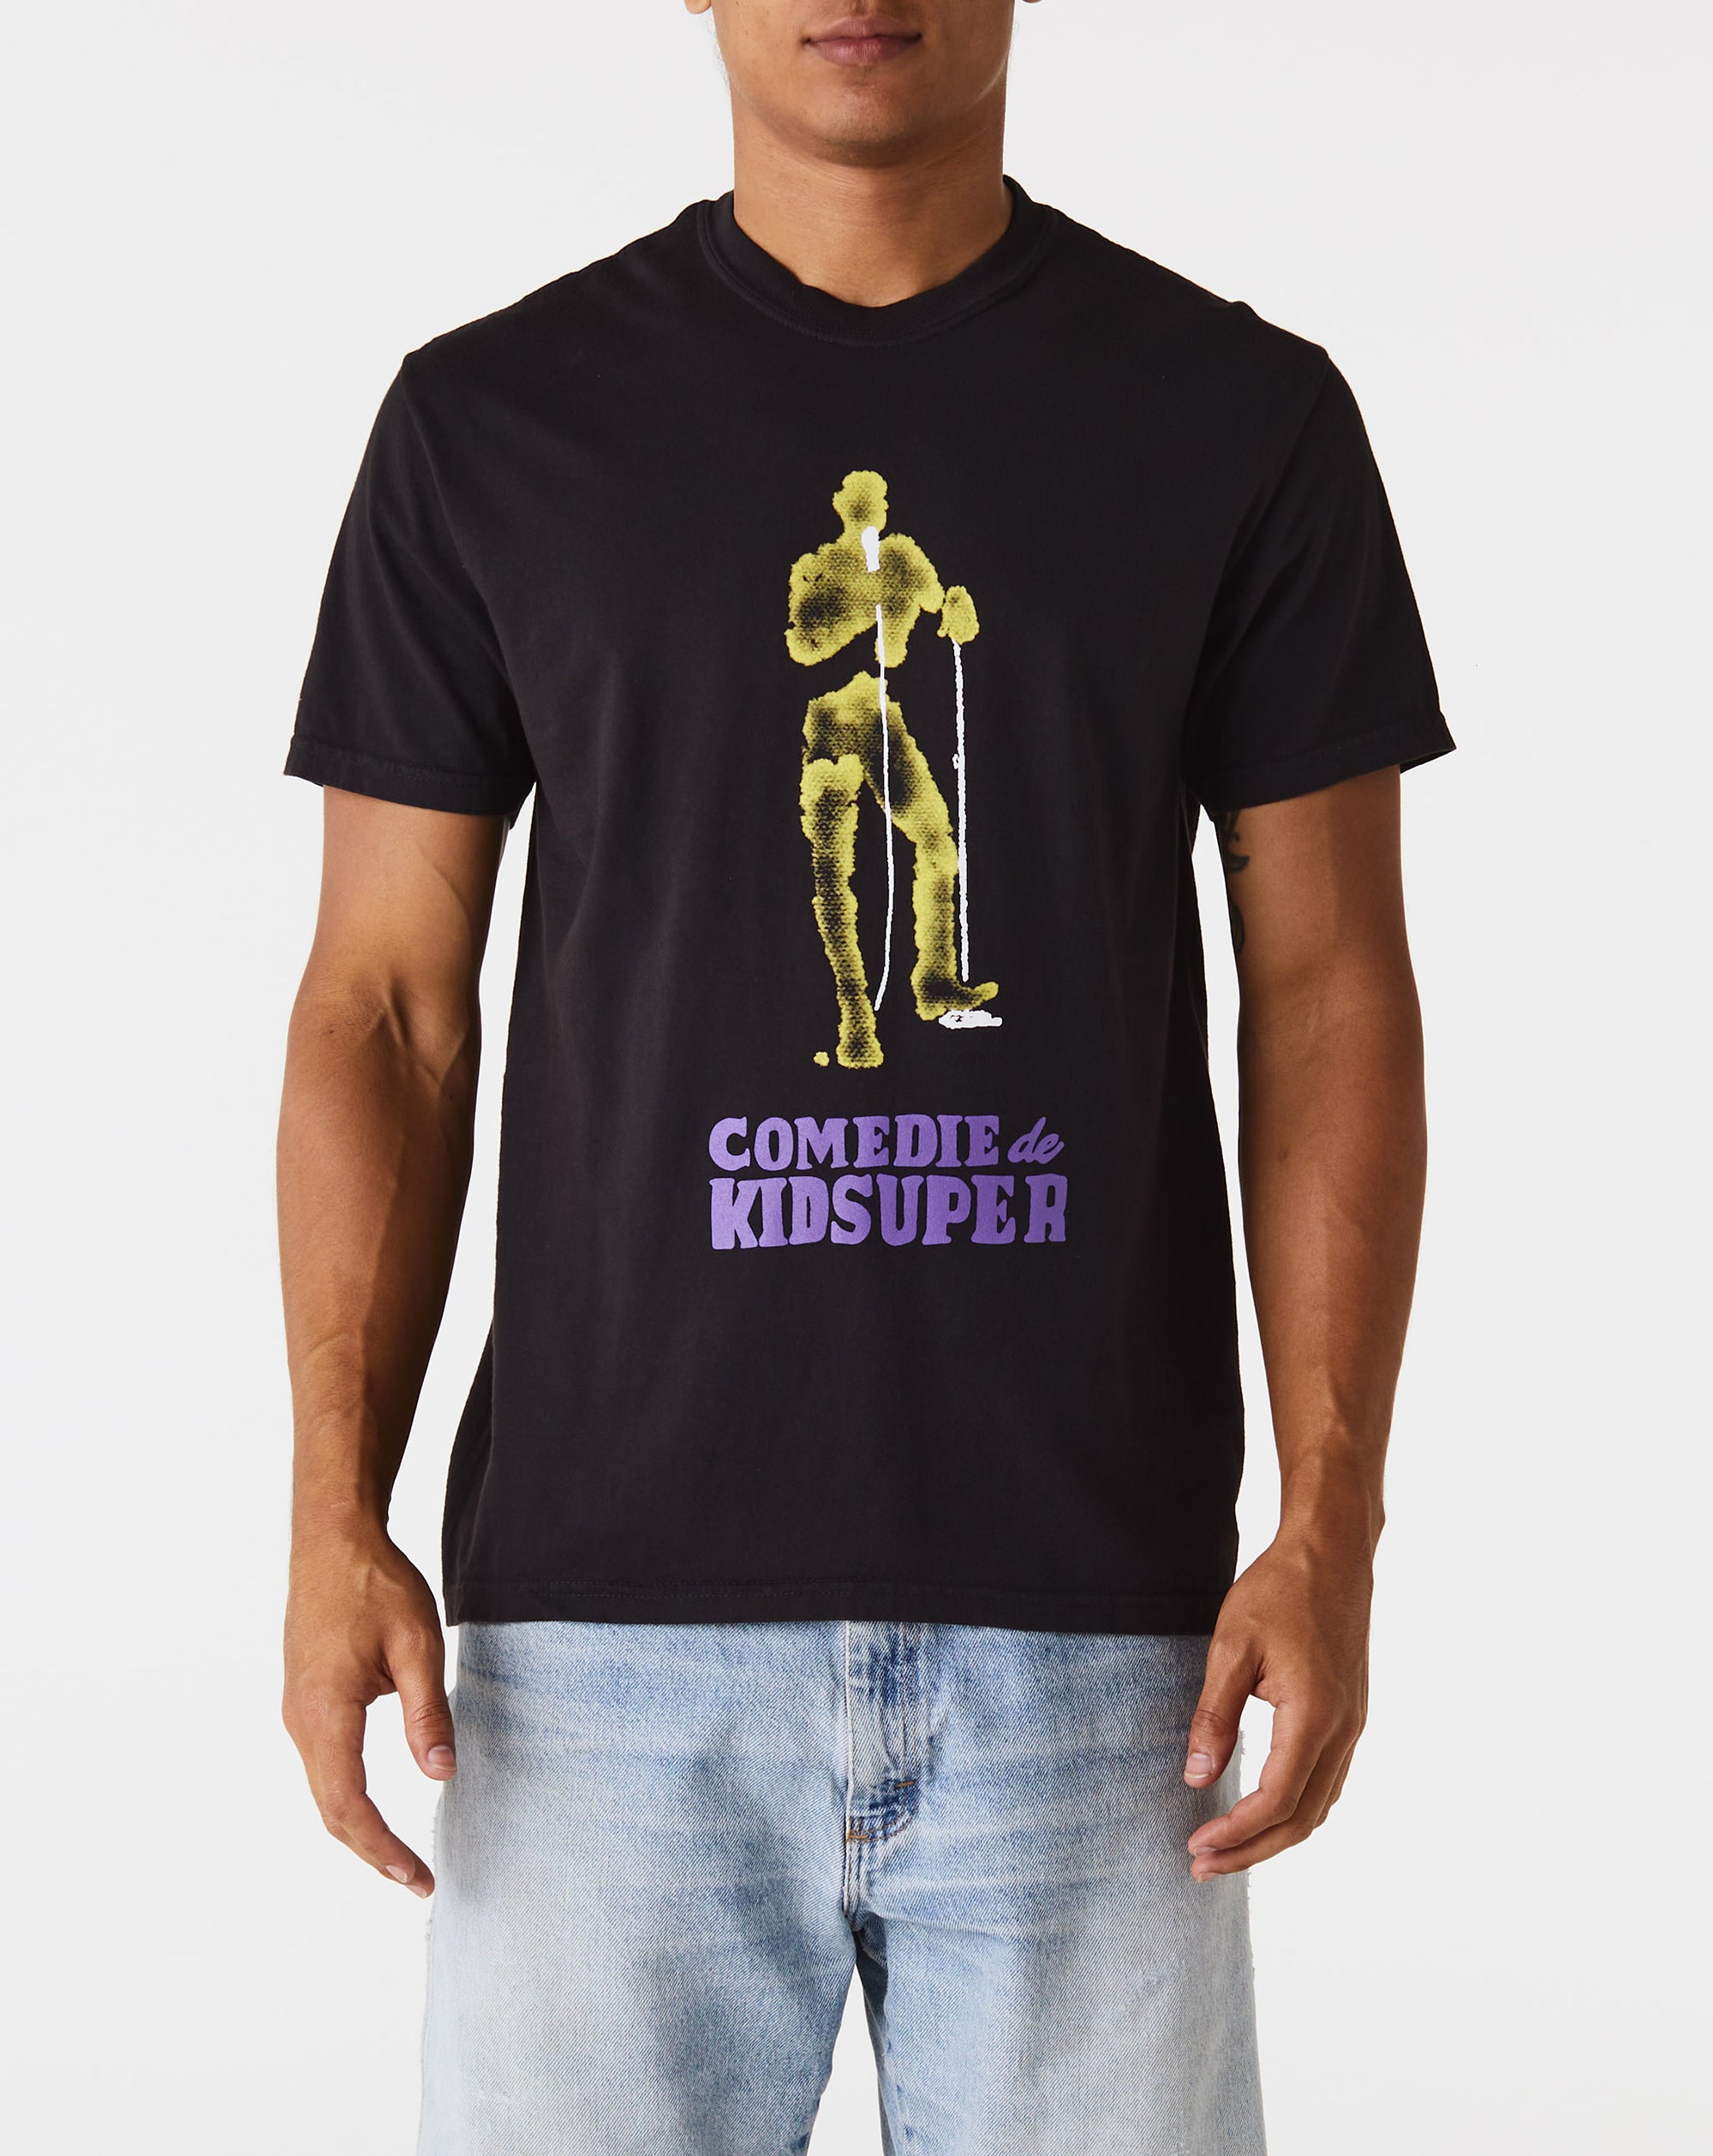 KidSuper Comedie T-Shirt - Rule of Next Apparel